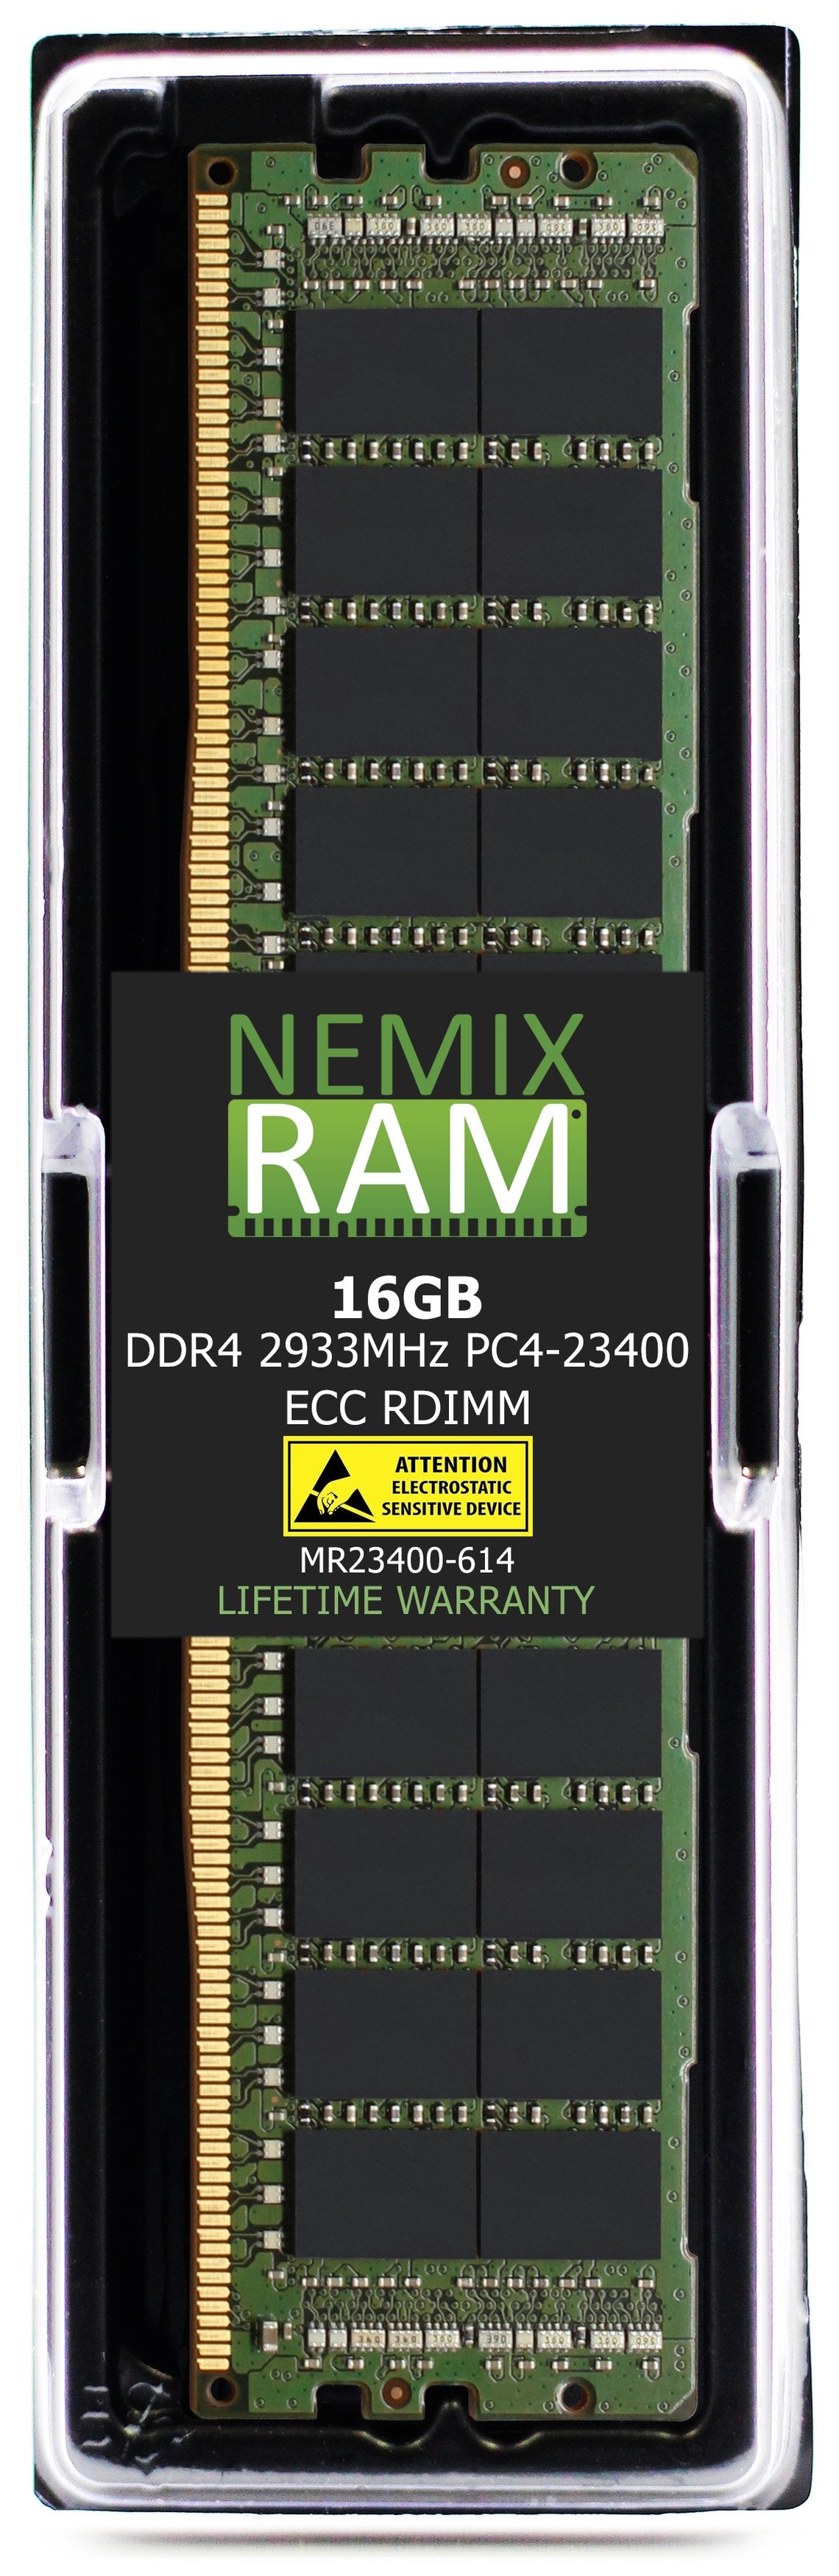 16GB DDR4 2933MHZ PC4-23400 RDIMM Compatible with Supermicro MEM-DR416L-SL03-ER29